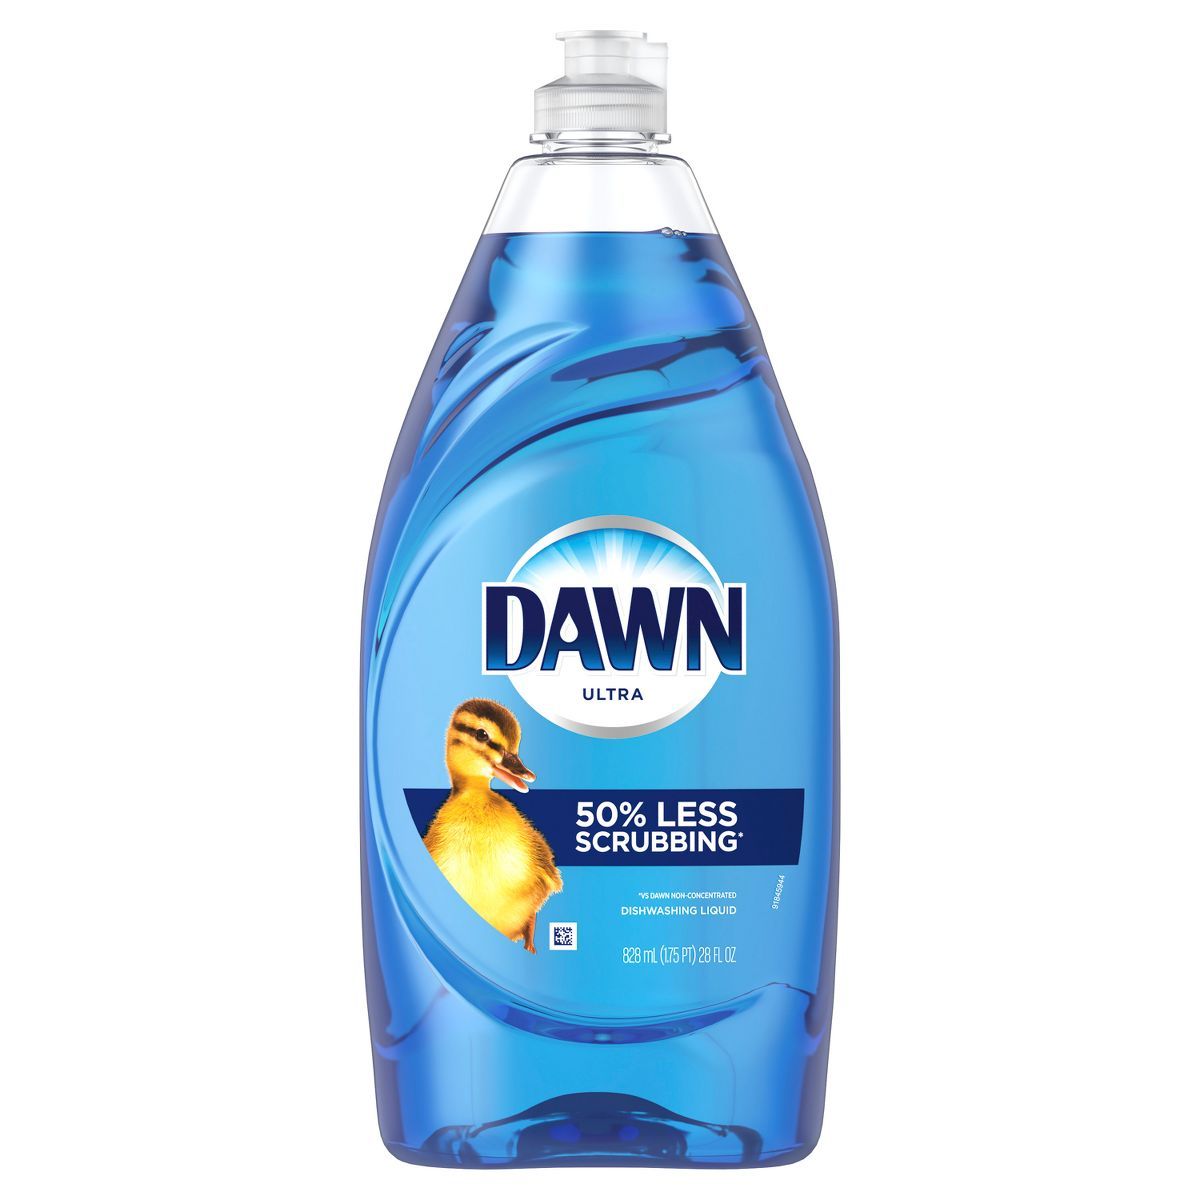 Dawn Original Scent Ultra Dishwashing Liquid Dish Soap | Target